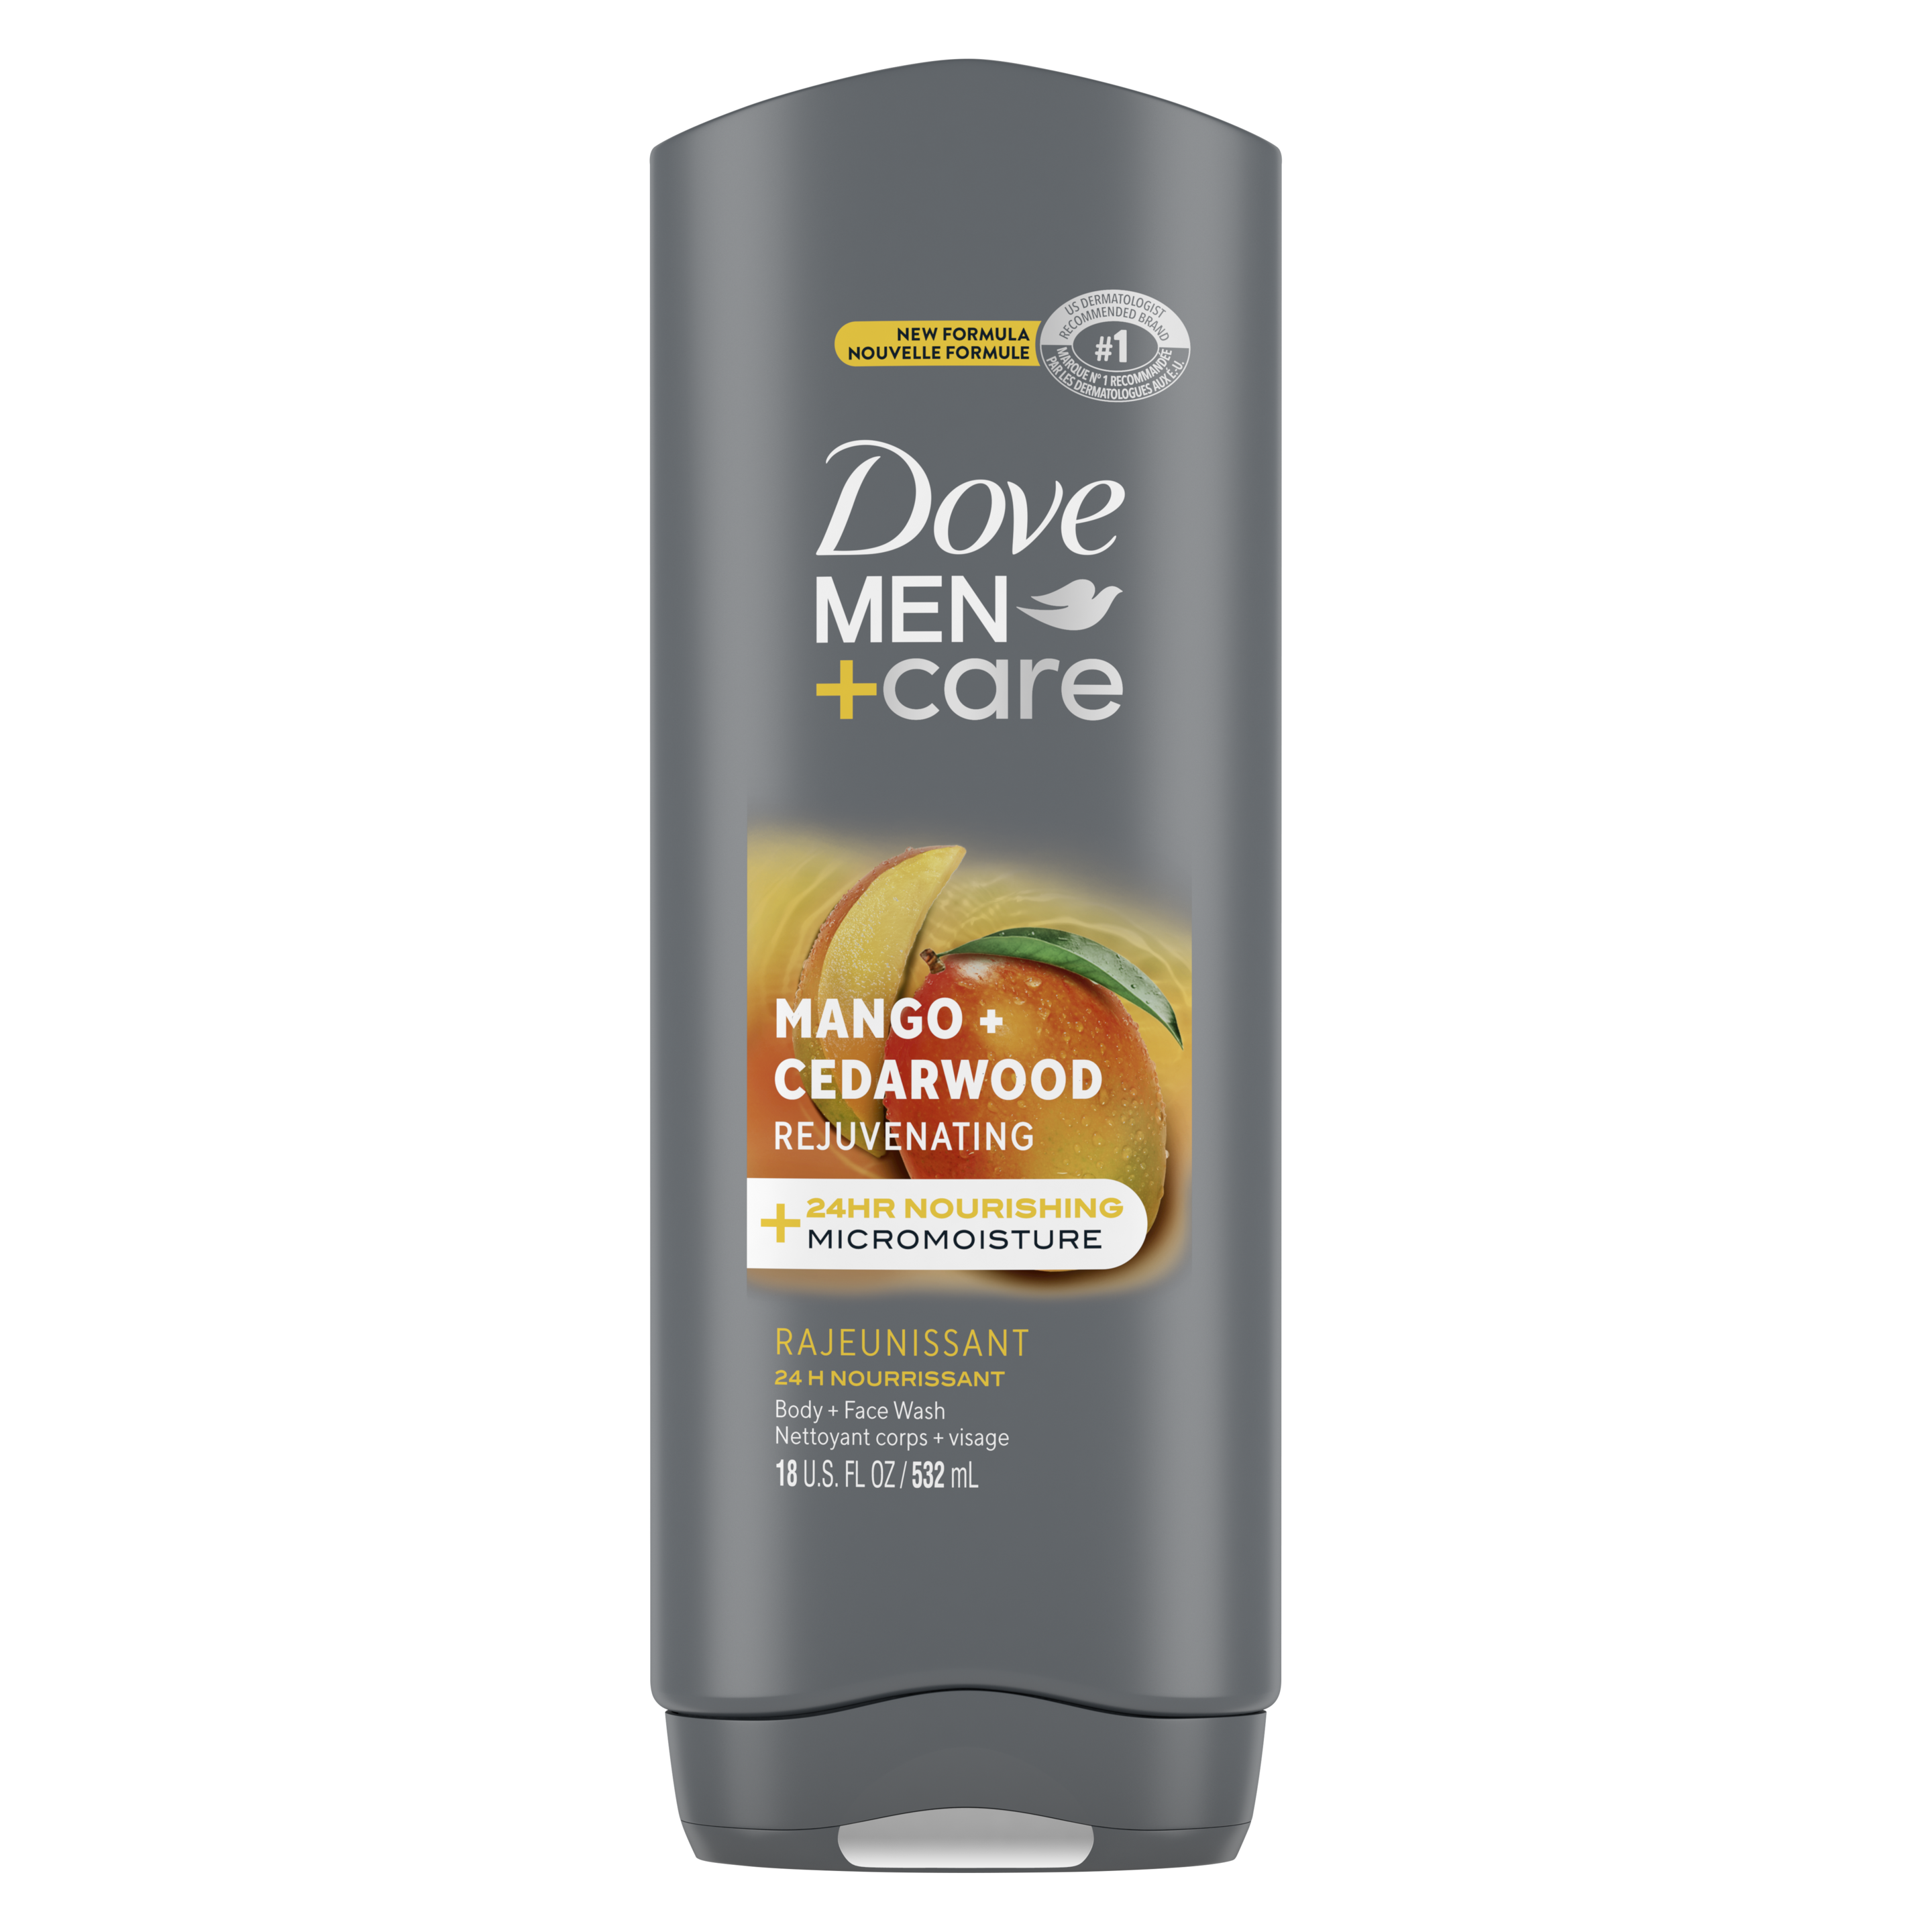 Dove Men+Care Mango + Cedarwood Rejuvenating Body + Face Wash